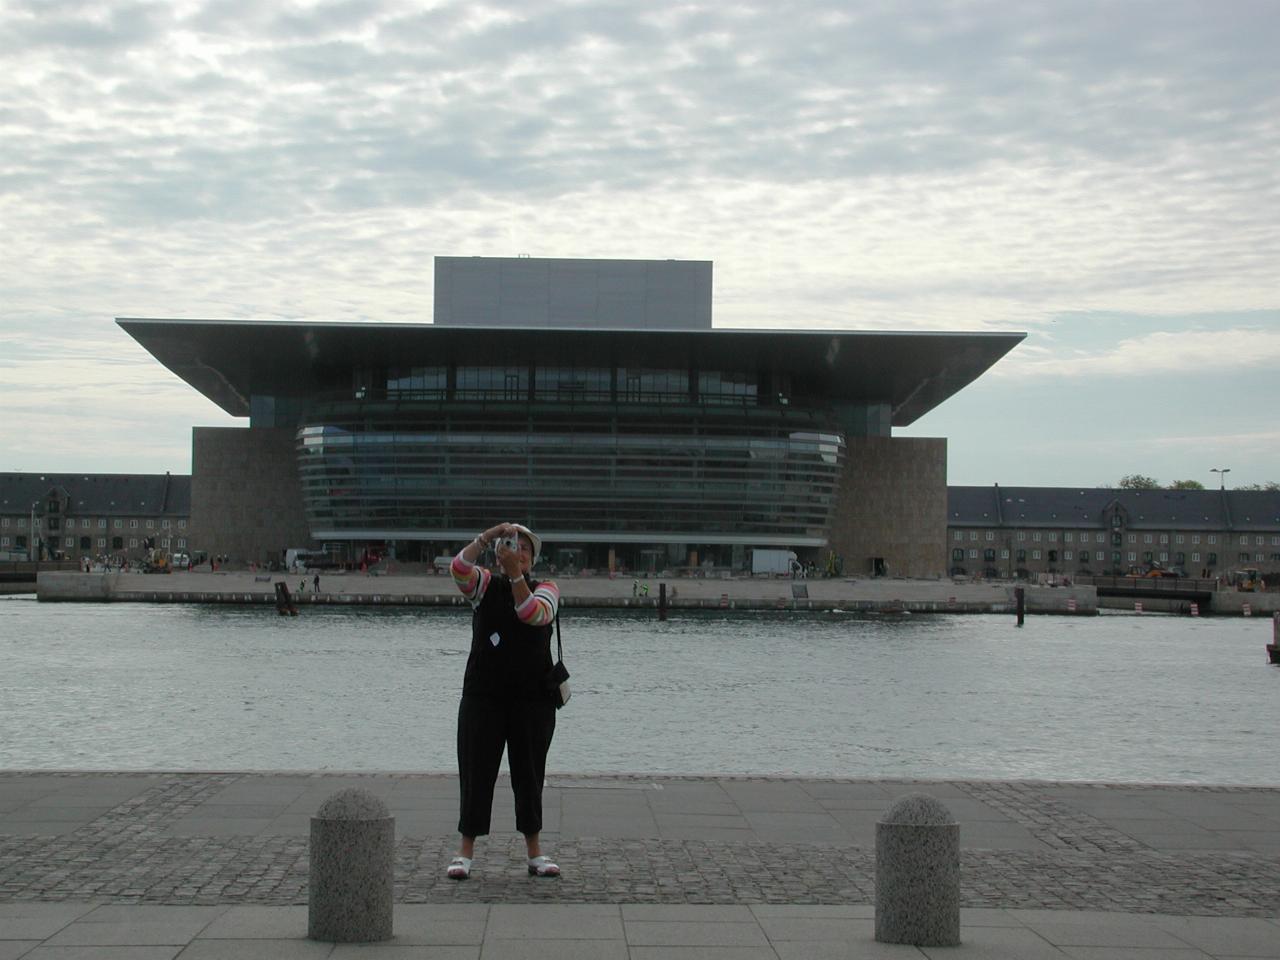 KPLU Viking Jazz: Barbara taking a picture of us; Opera House in background